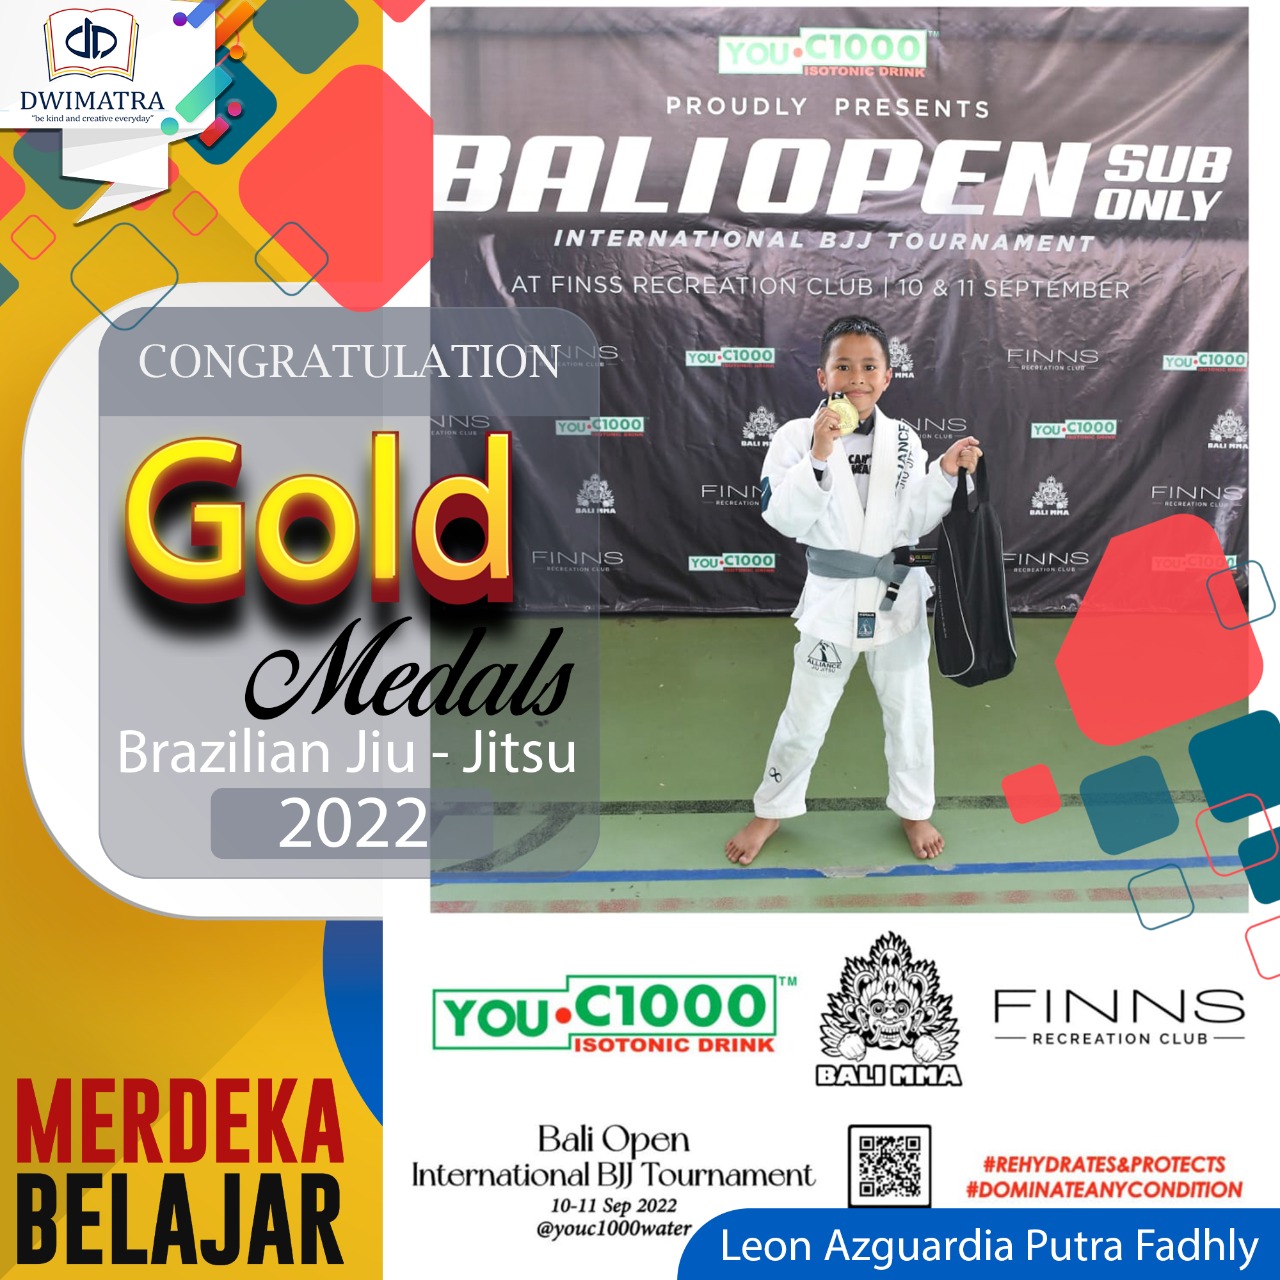 Leon Azguardia Putra Fadly has been awarded as gold medals winner in Brazillian Jiu-Jitsu competition.